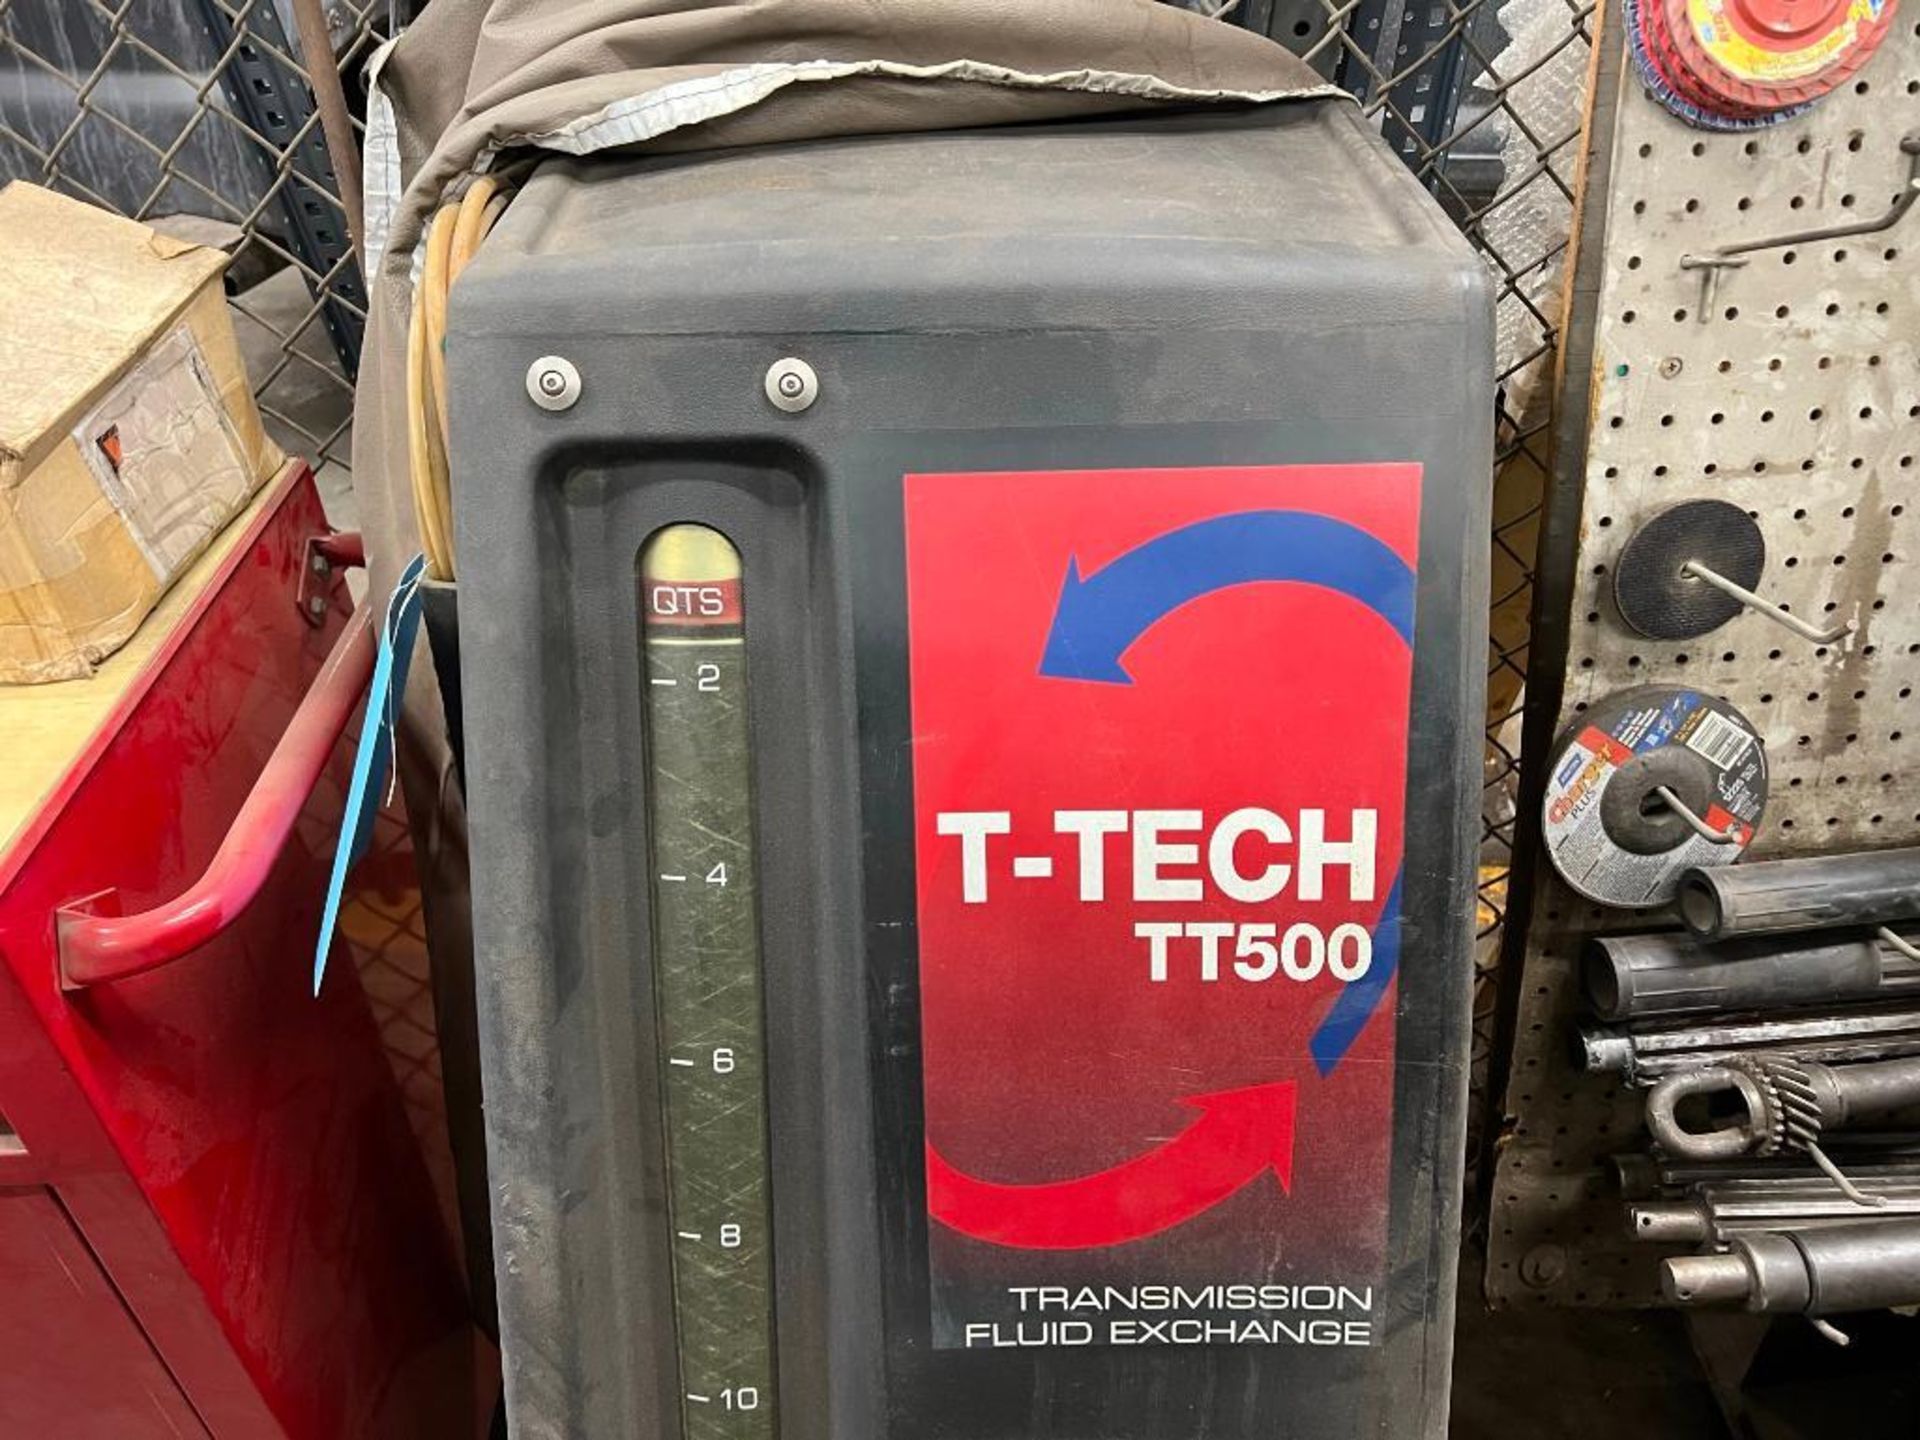 T-Tech TT500 Automatic Transmission Fluid Exchanger - Image 3 of 6